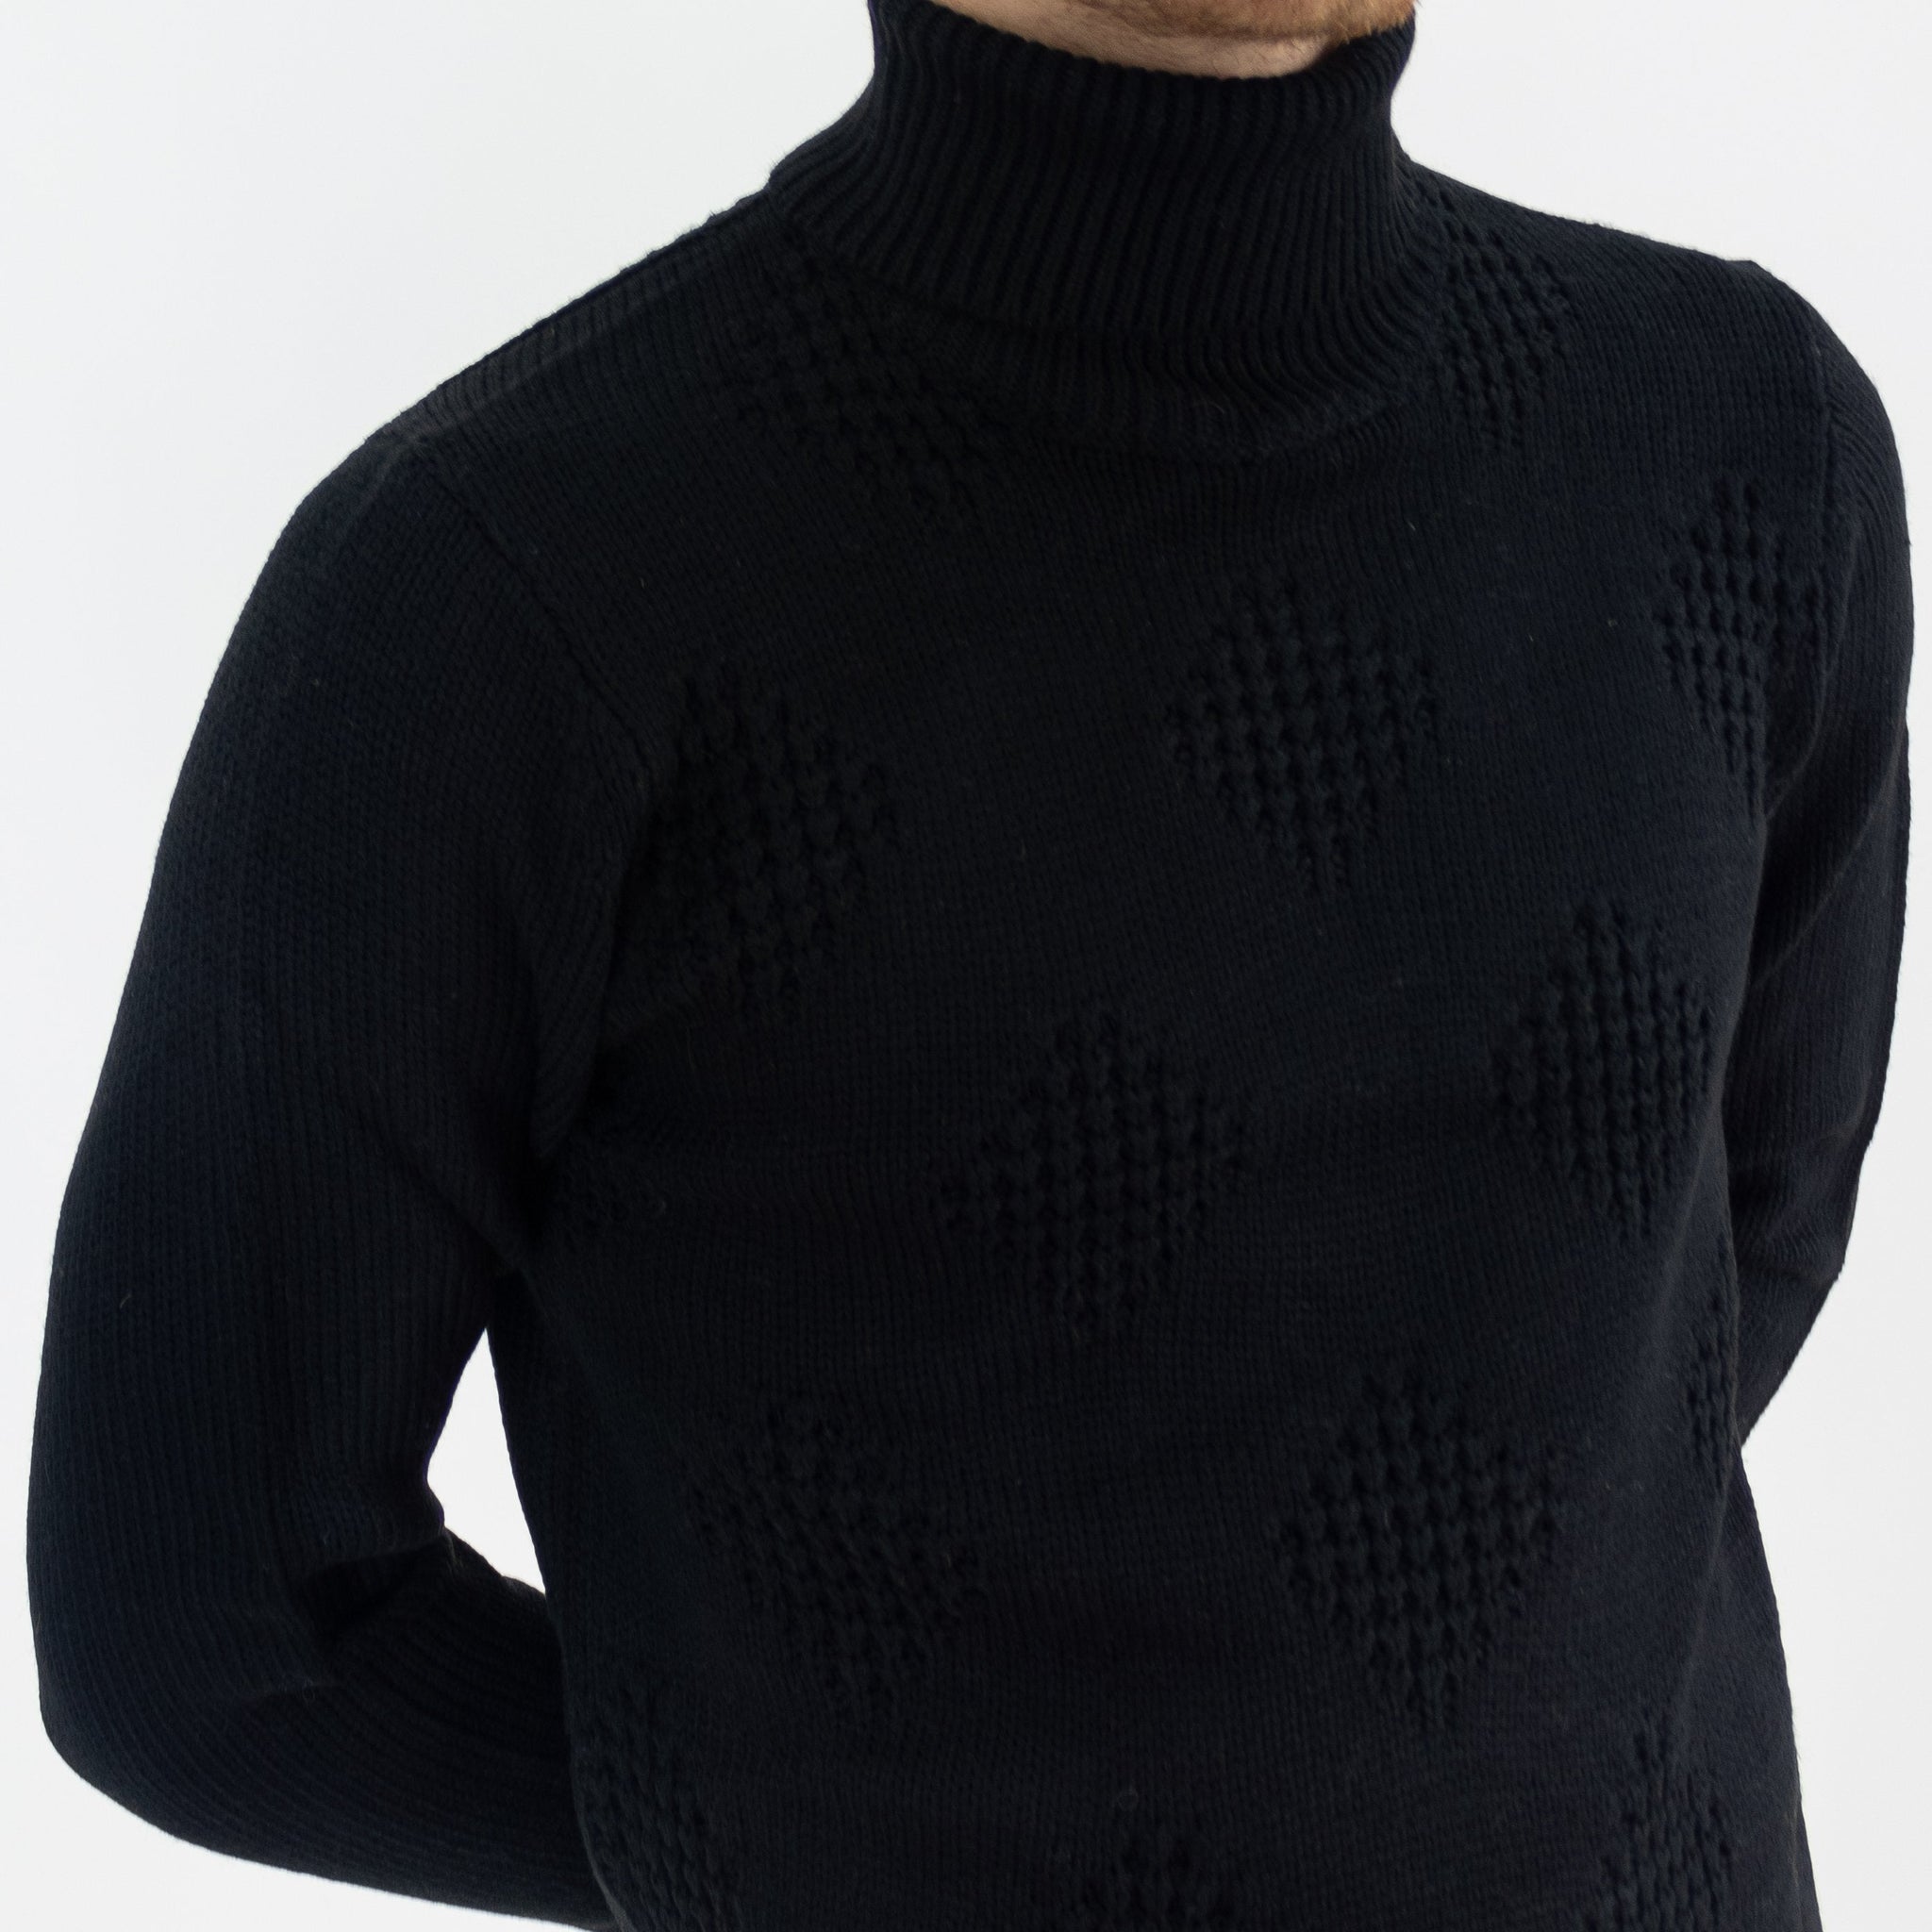 Turtleneck sweater with diamond pattern